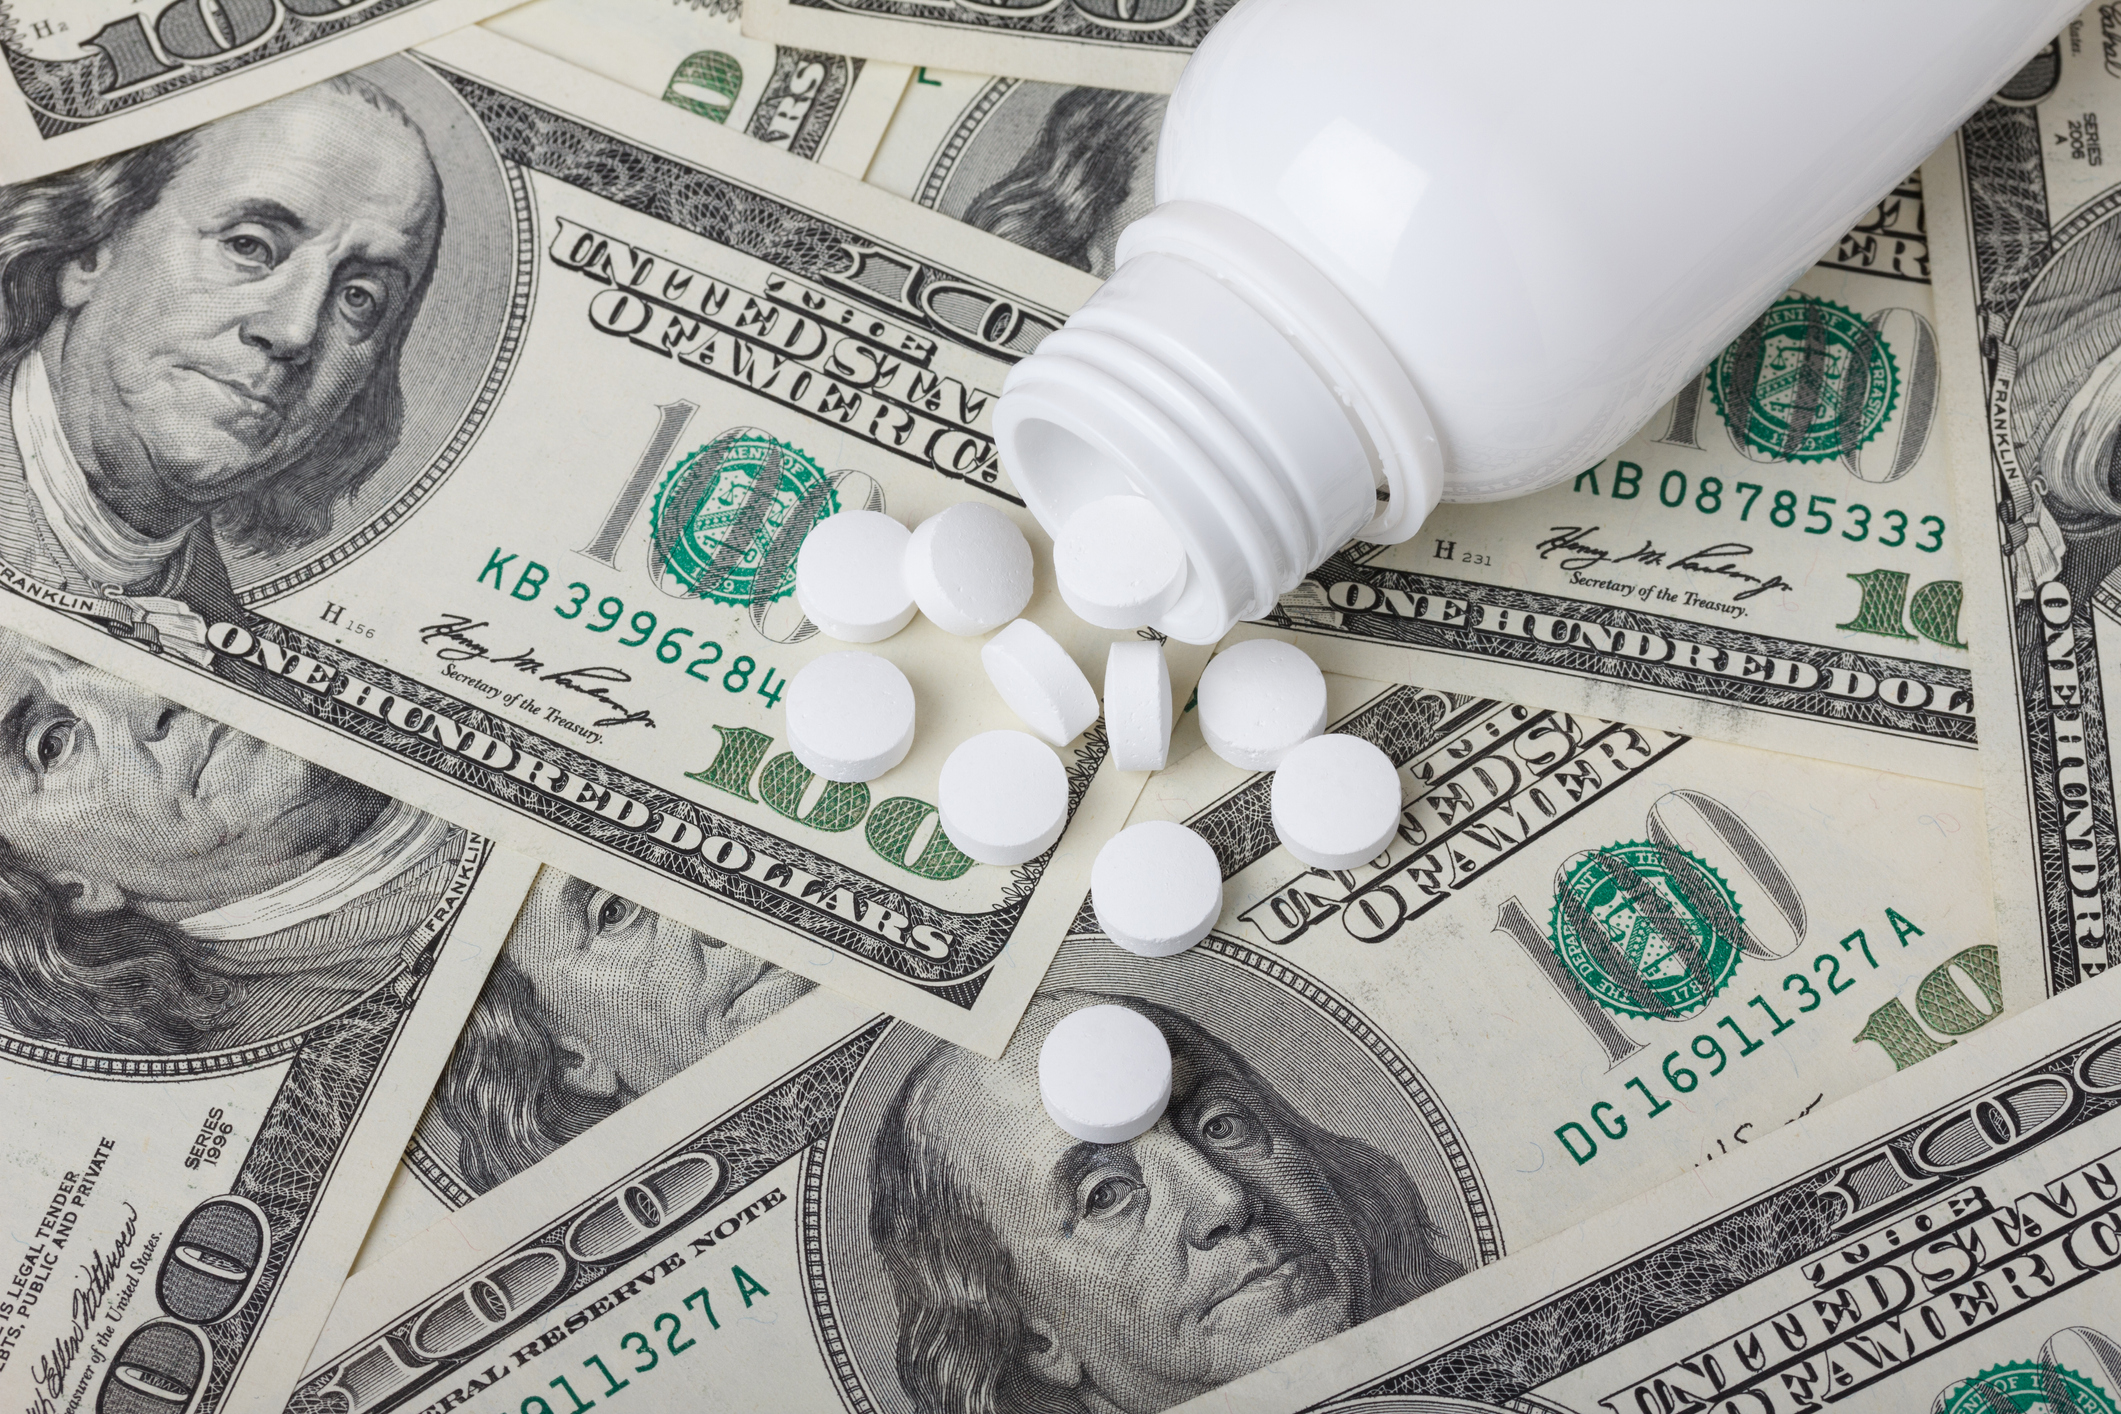 Alex Brill Testifies Before U.S. Senate on Lowering Prescription Drug Prices